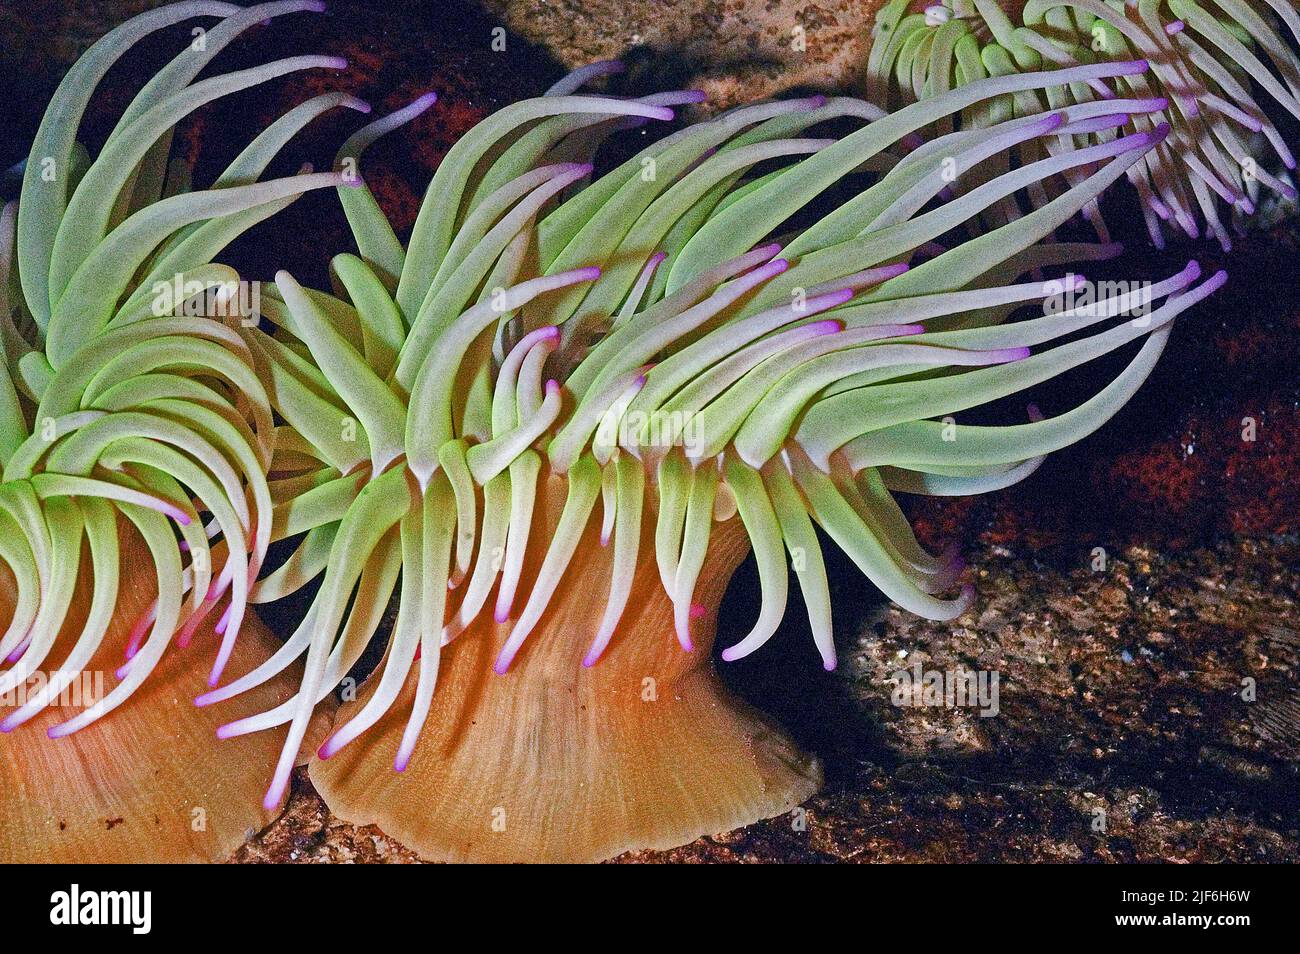 Striped Anemone, Anthothoe stimpsoni. Stock Photo